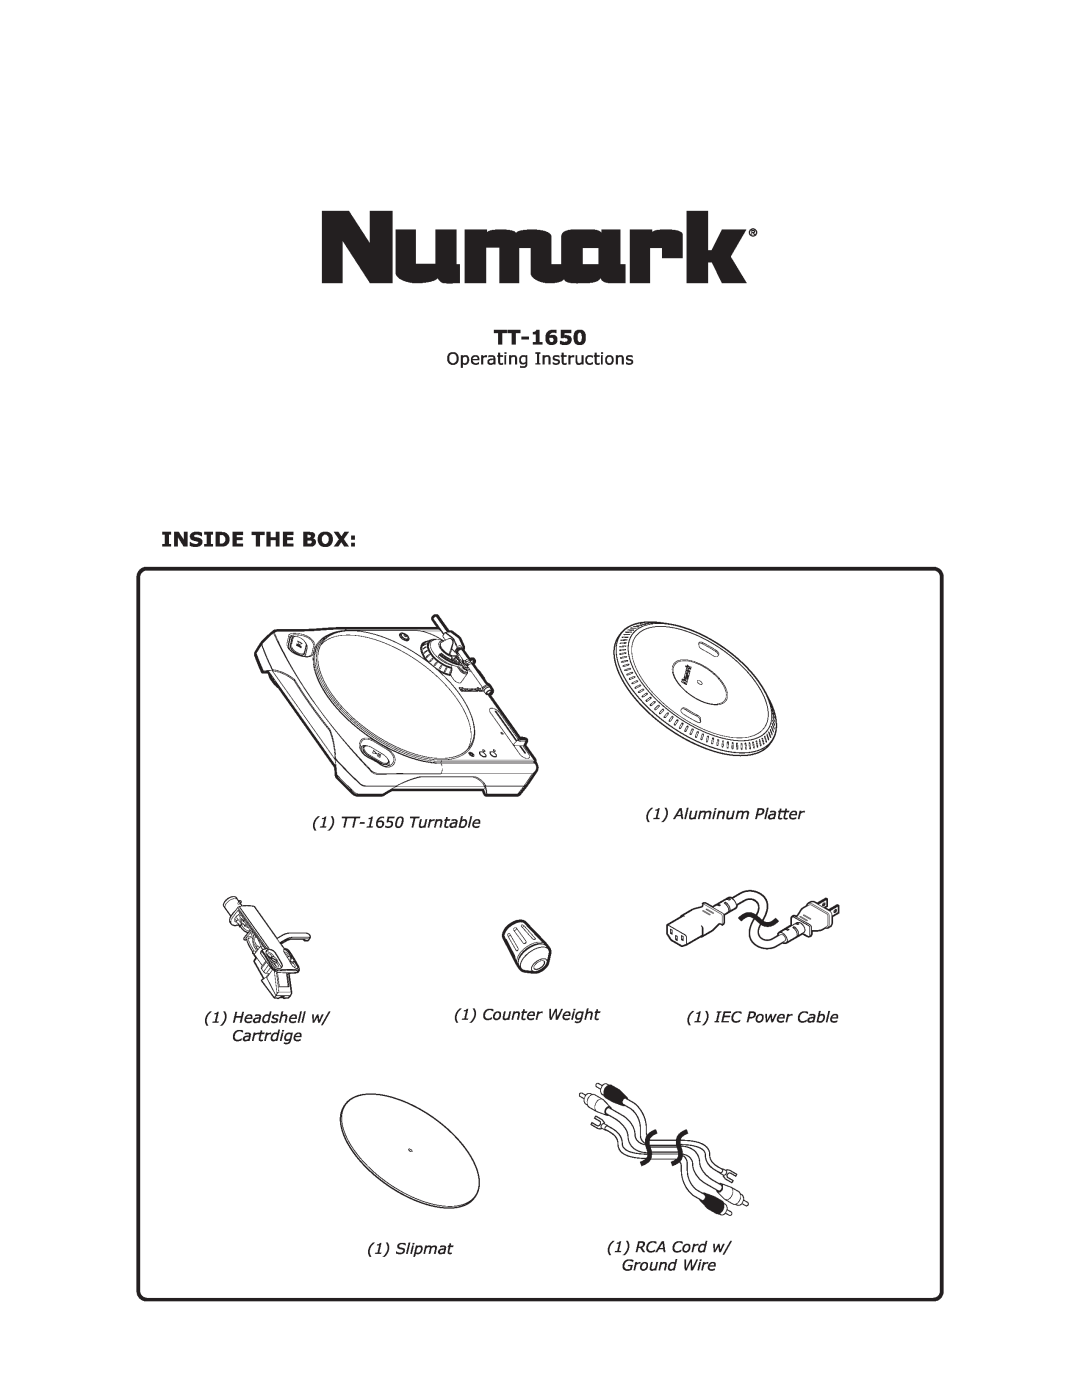 Numark Industries manual Inside The Box, Operating Instructions, 1 TT-1650Turntable, Aluminum Platter, Headshell w 